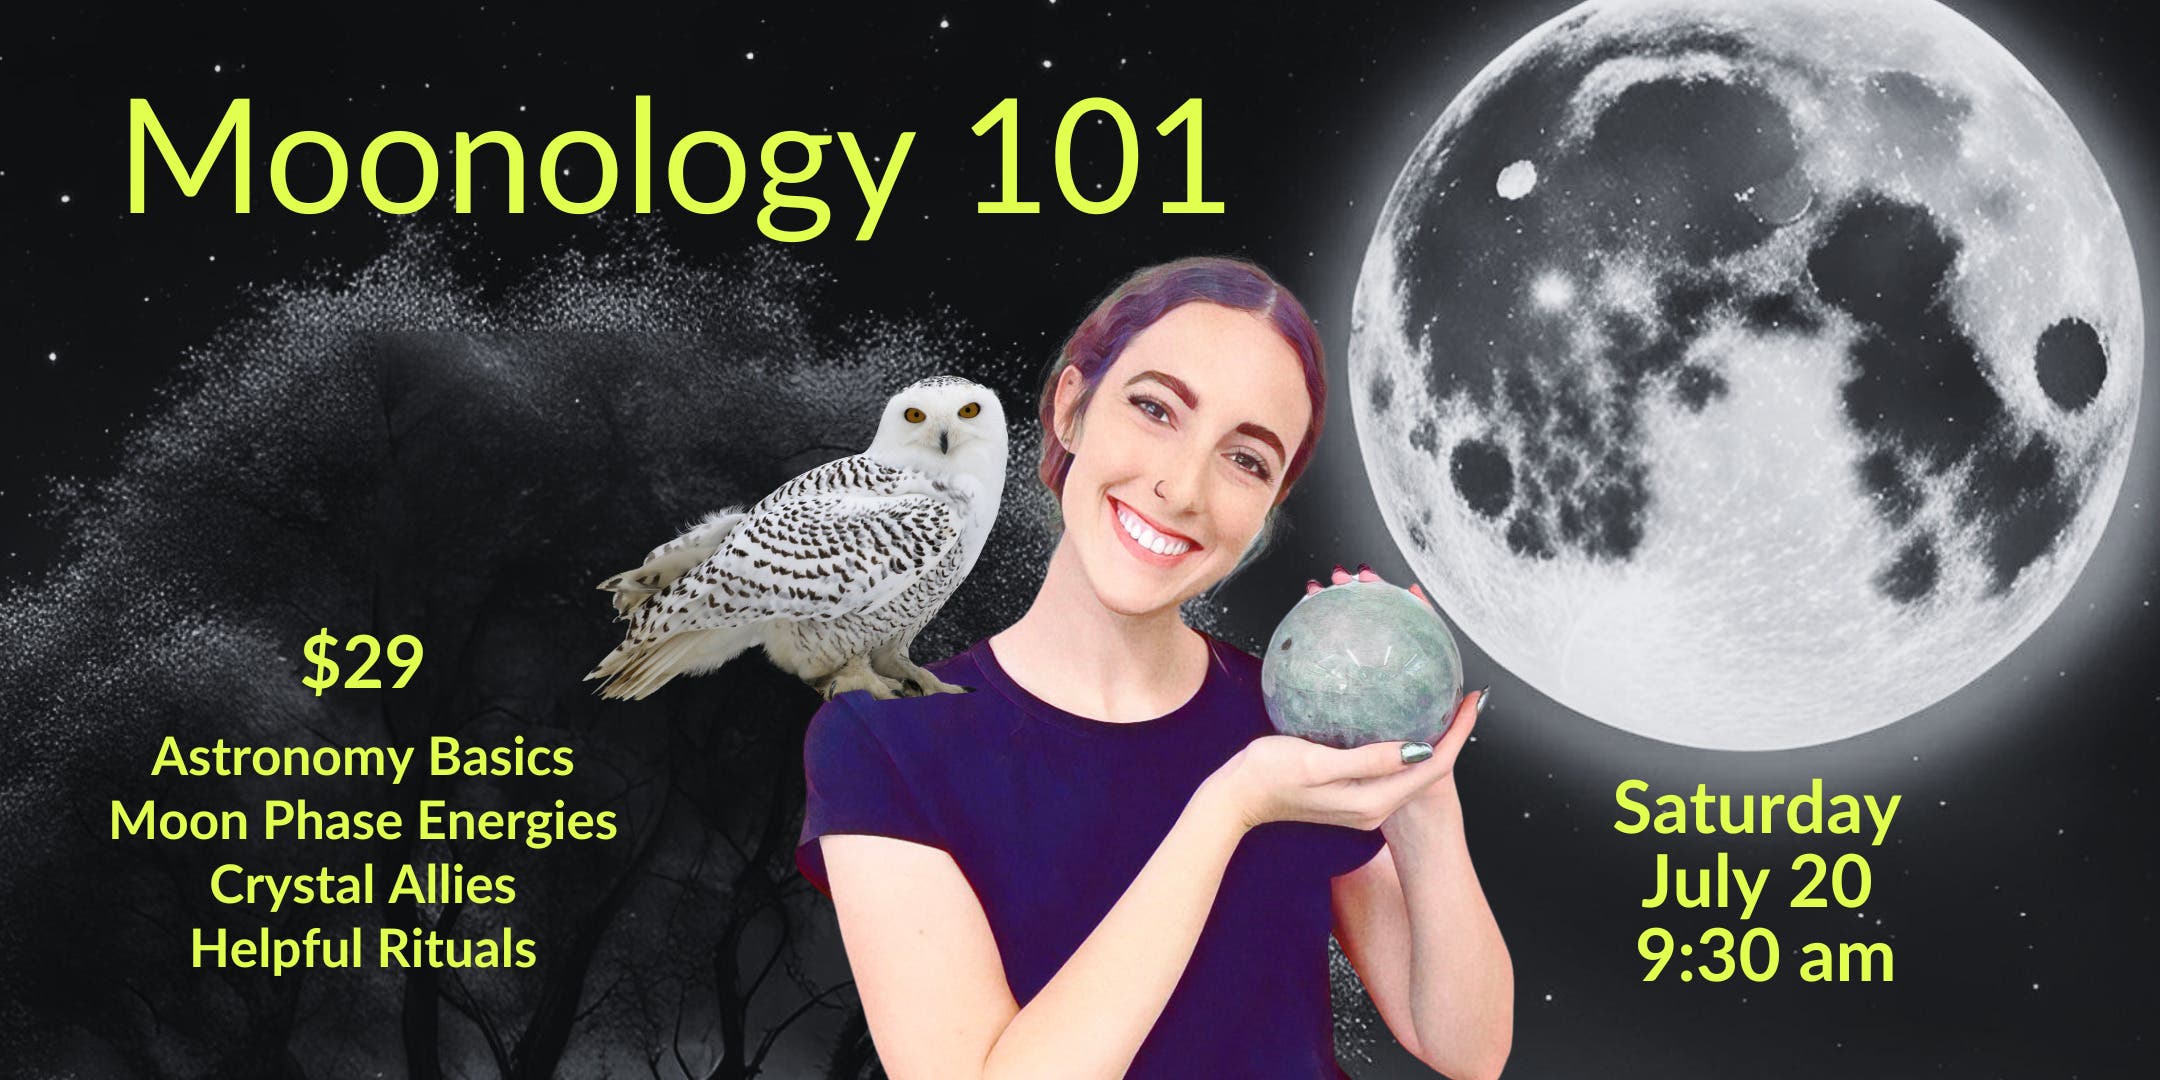 Moonology 101 - Dive deep into the mystical world of lunar wisdom